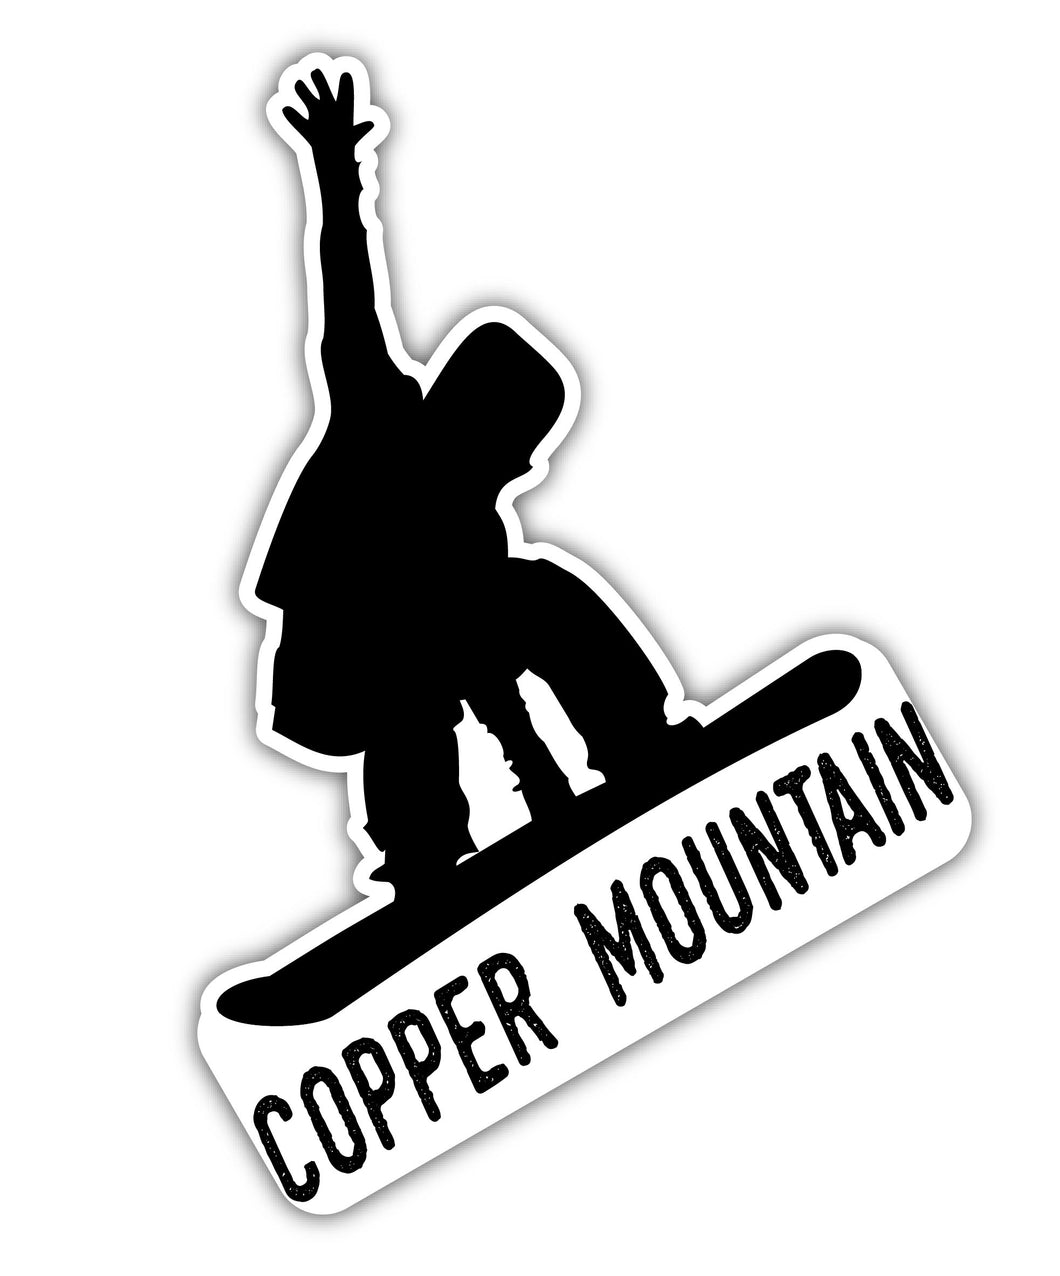 Copper Mountain Colorado Ski Adventures Souvenir Approximately 5 x 2.5-Inch Vinyl Decal Sticker Goggle Design